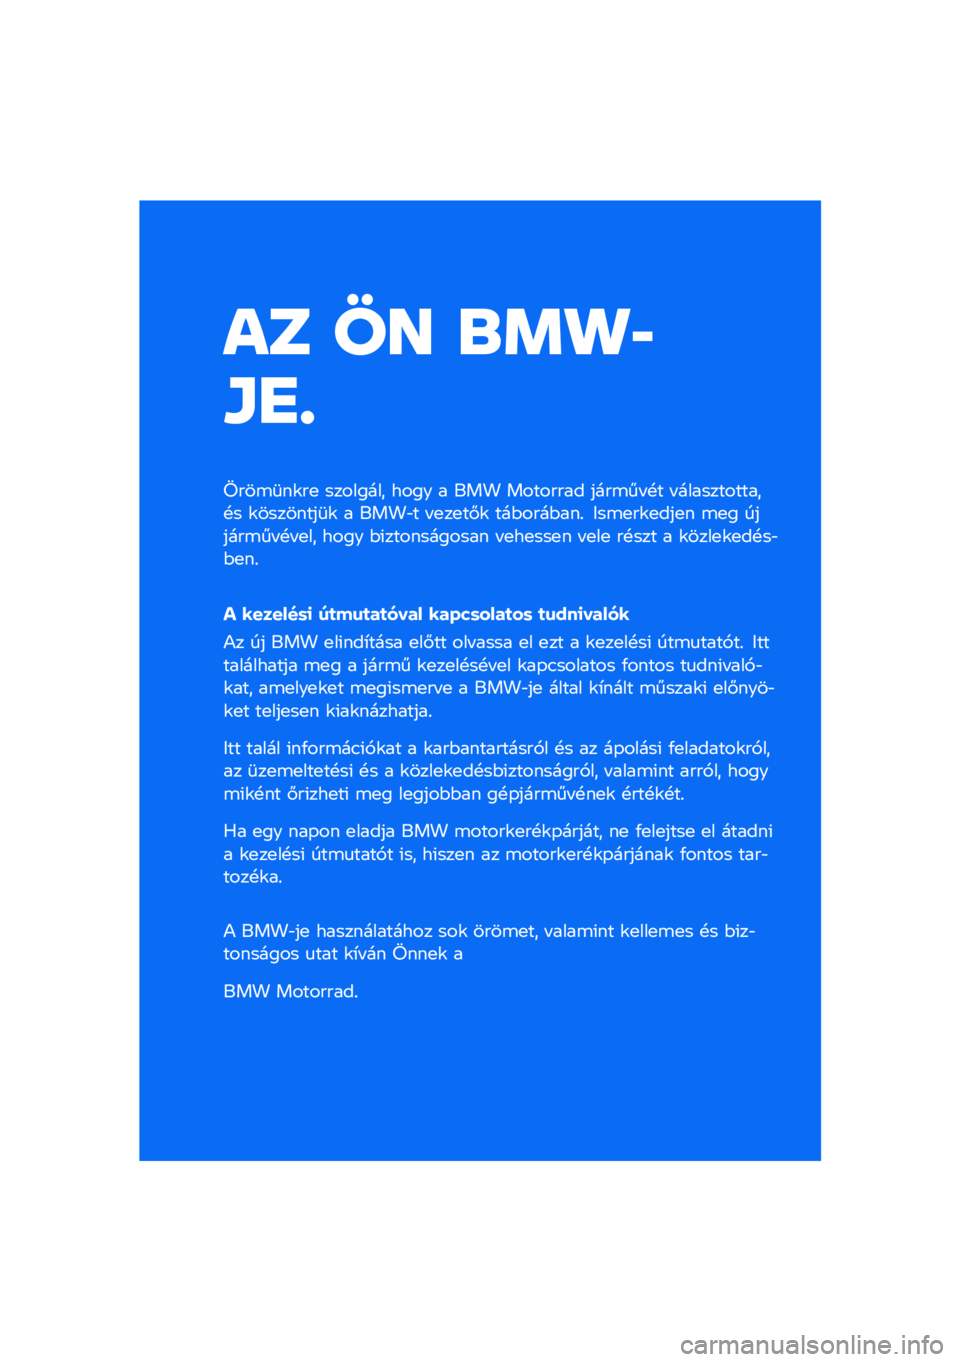 BMW MOTORRAD R 1250 RS 2021  Kezelési útmutató (in Hungarian) �� �� �\b�	�
�
�\f�
�
����\b�	��\f��
 �������� ���� � ��� �������� ����\b�� �!� � ������������!� �\f��������	�\f � ����"� � �
��
��#�\